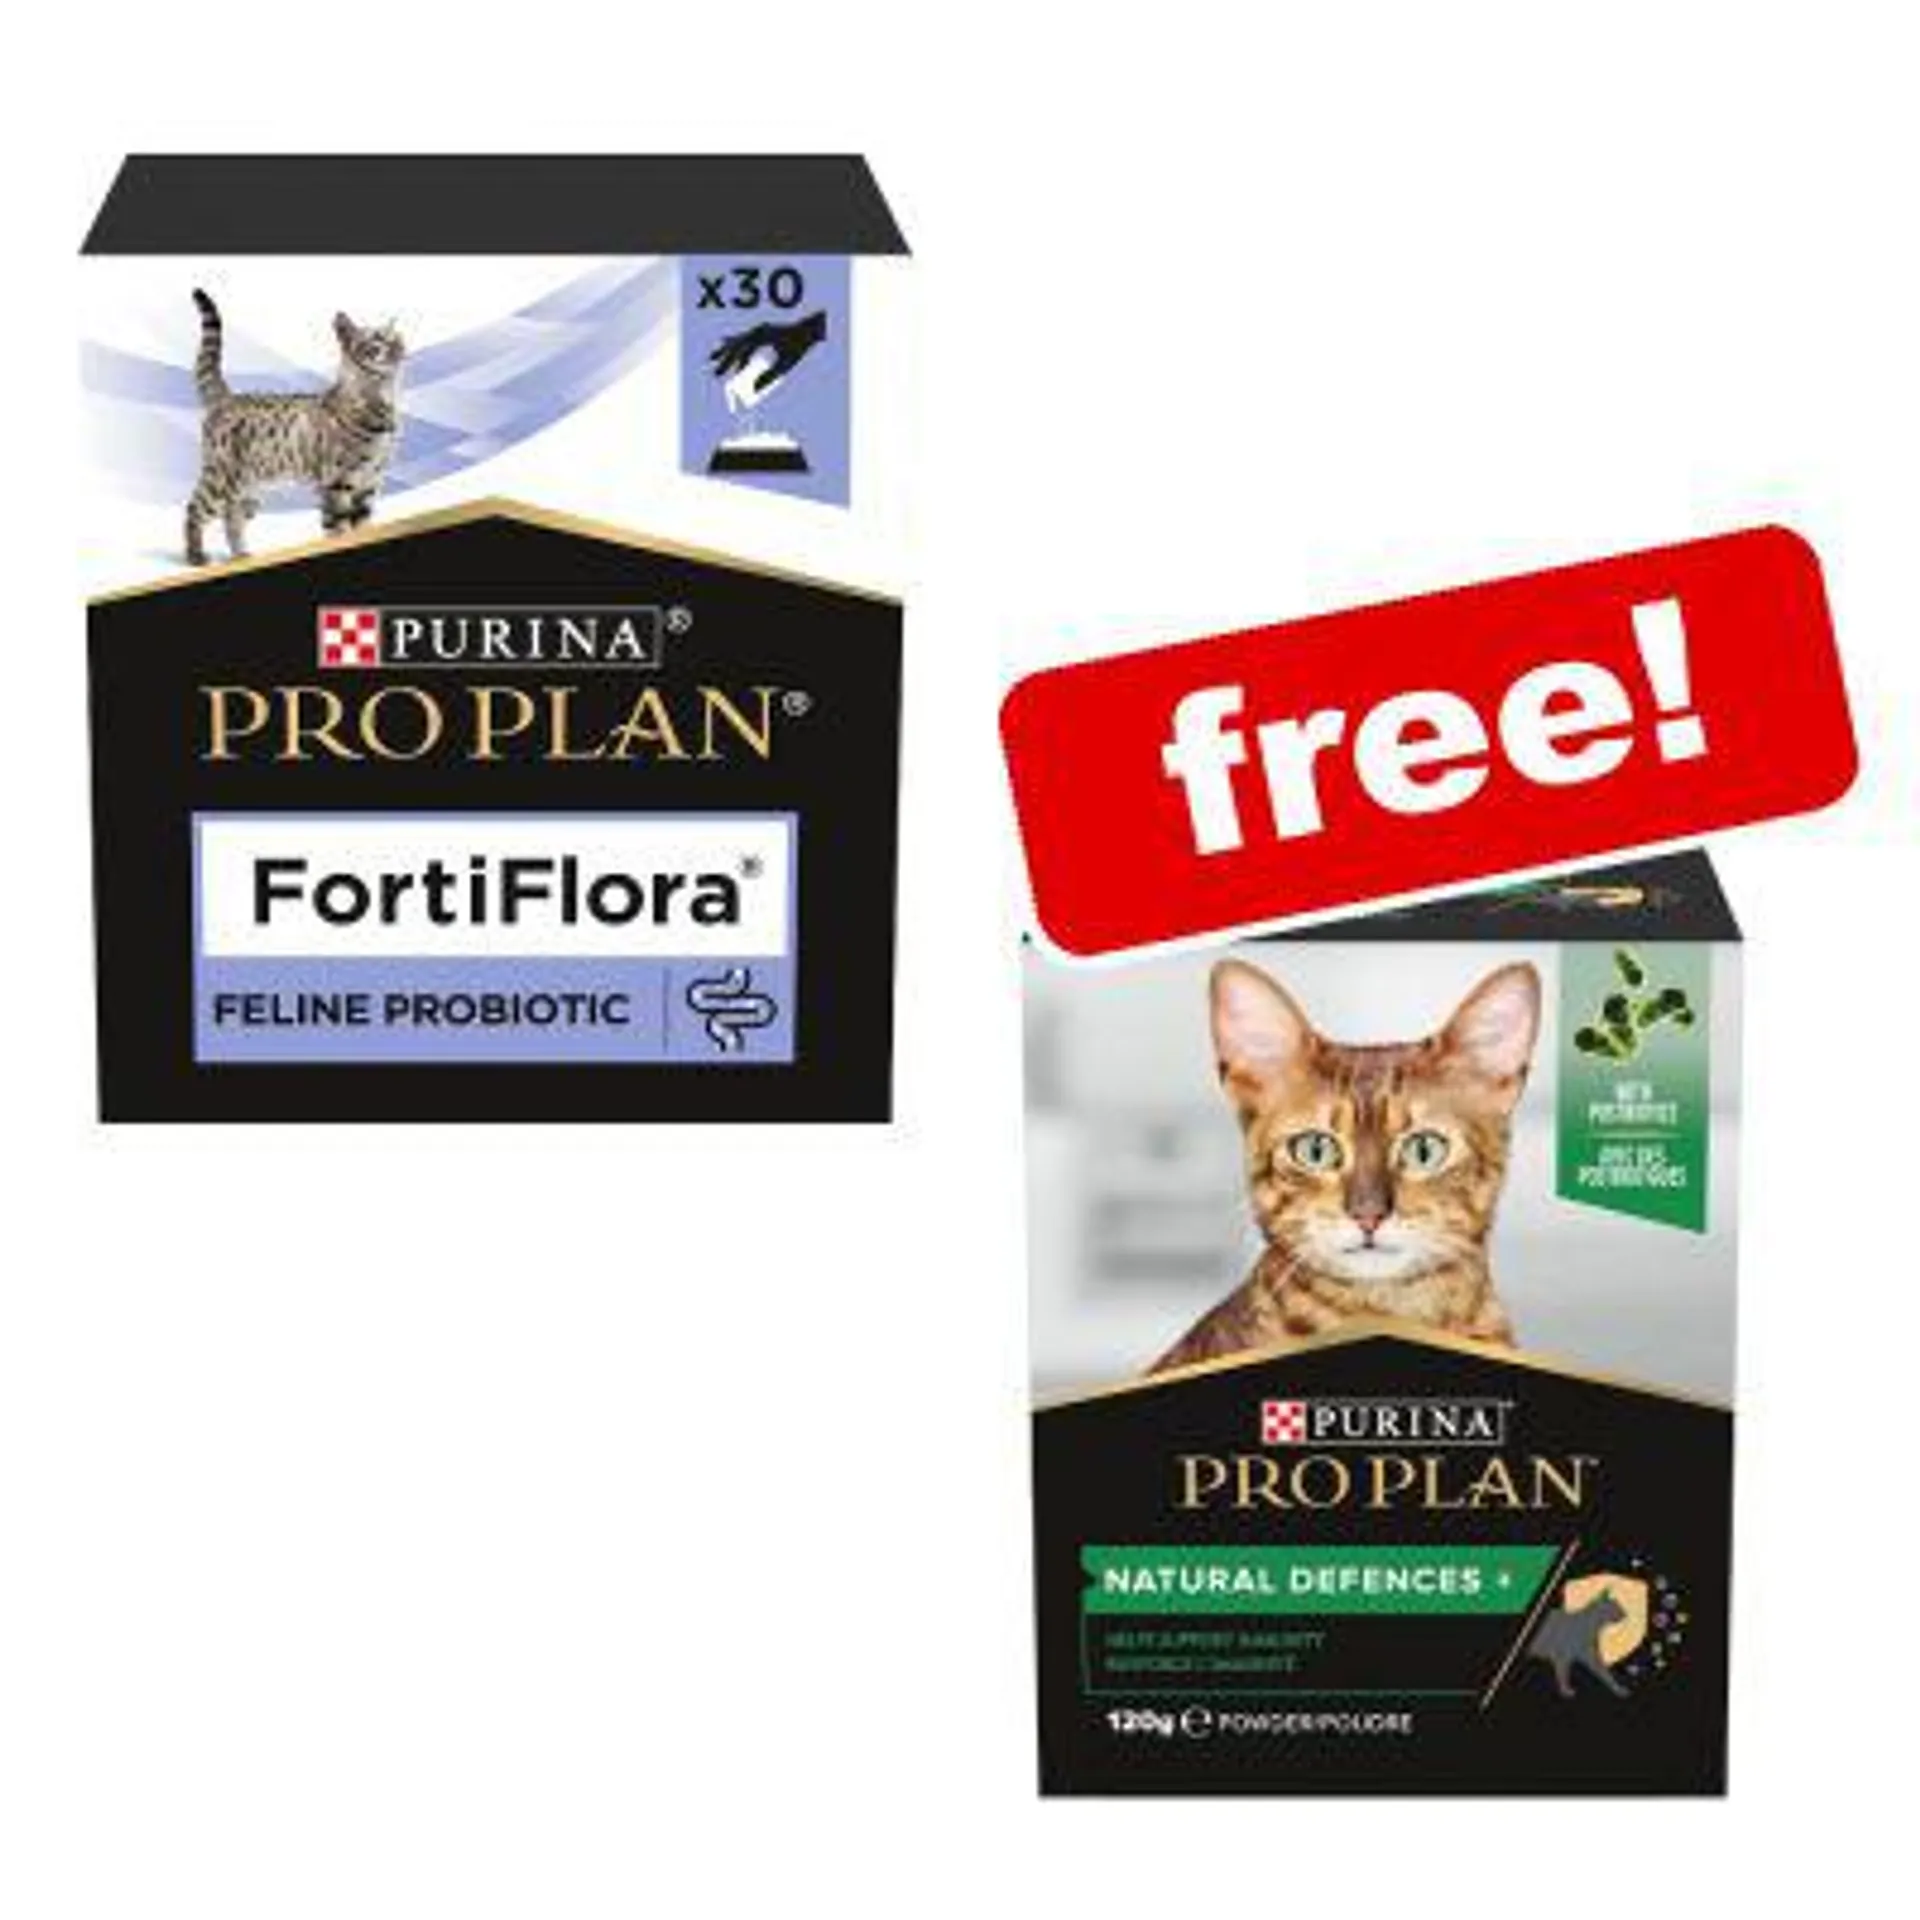 Pro Plan Fortiflora Feline Probiotic + 60g Supplement Natural Defences Free!*